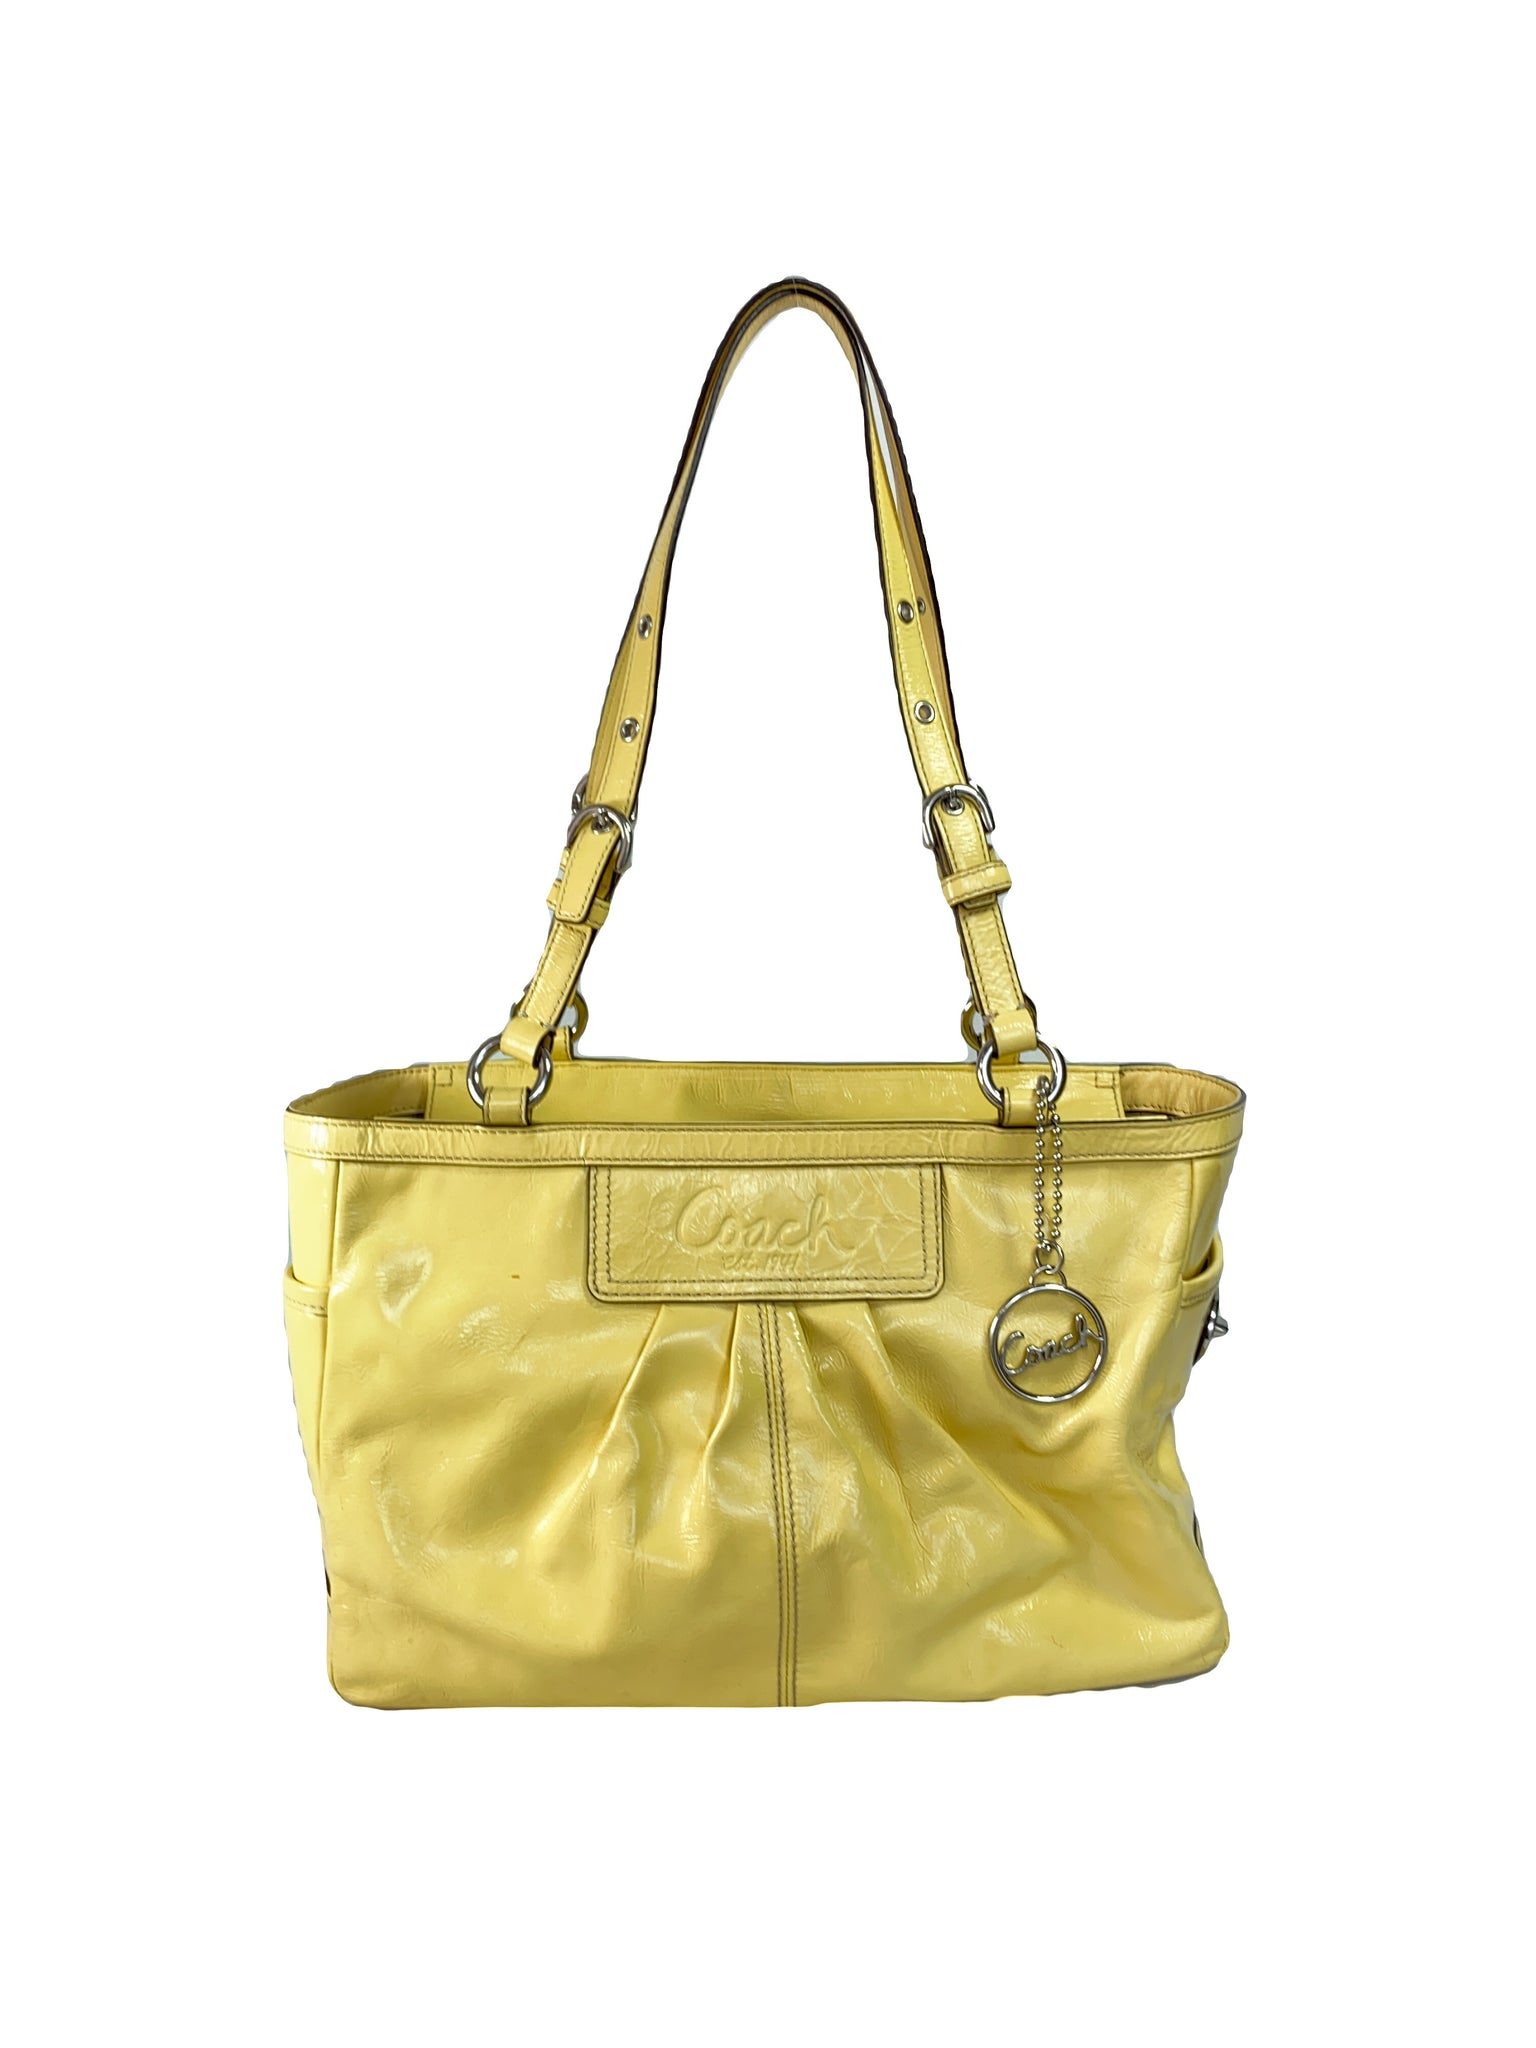 Coach - Coach Sunflower Yellow Purse/Shoulder Bag on Designer Wardrobe